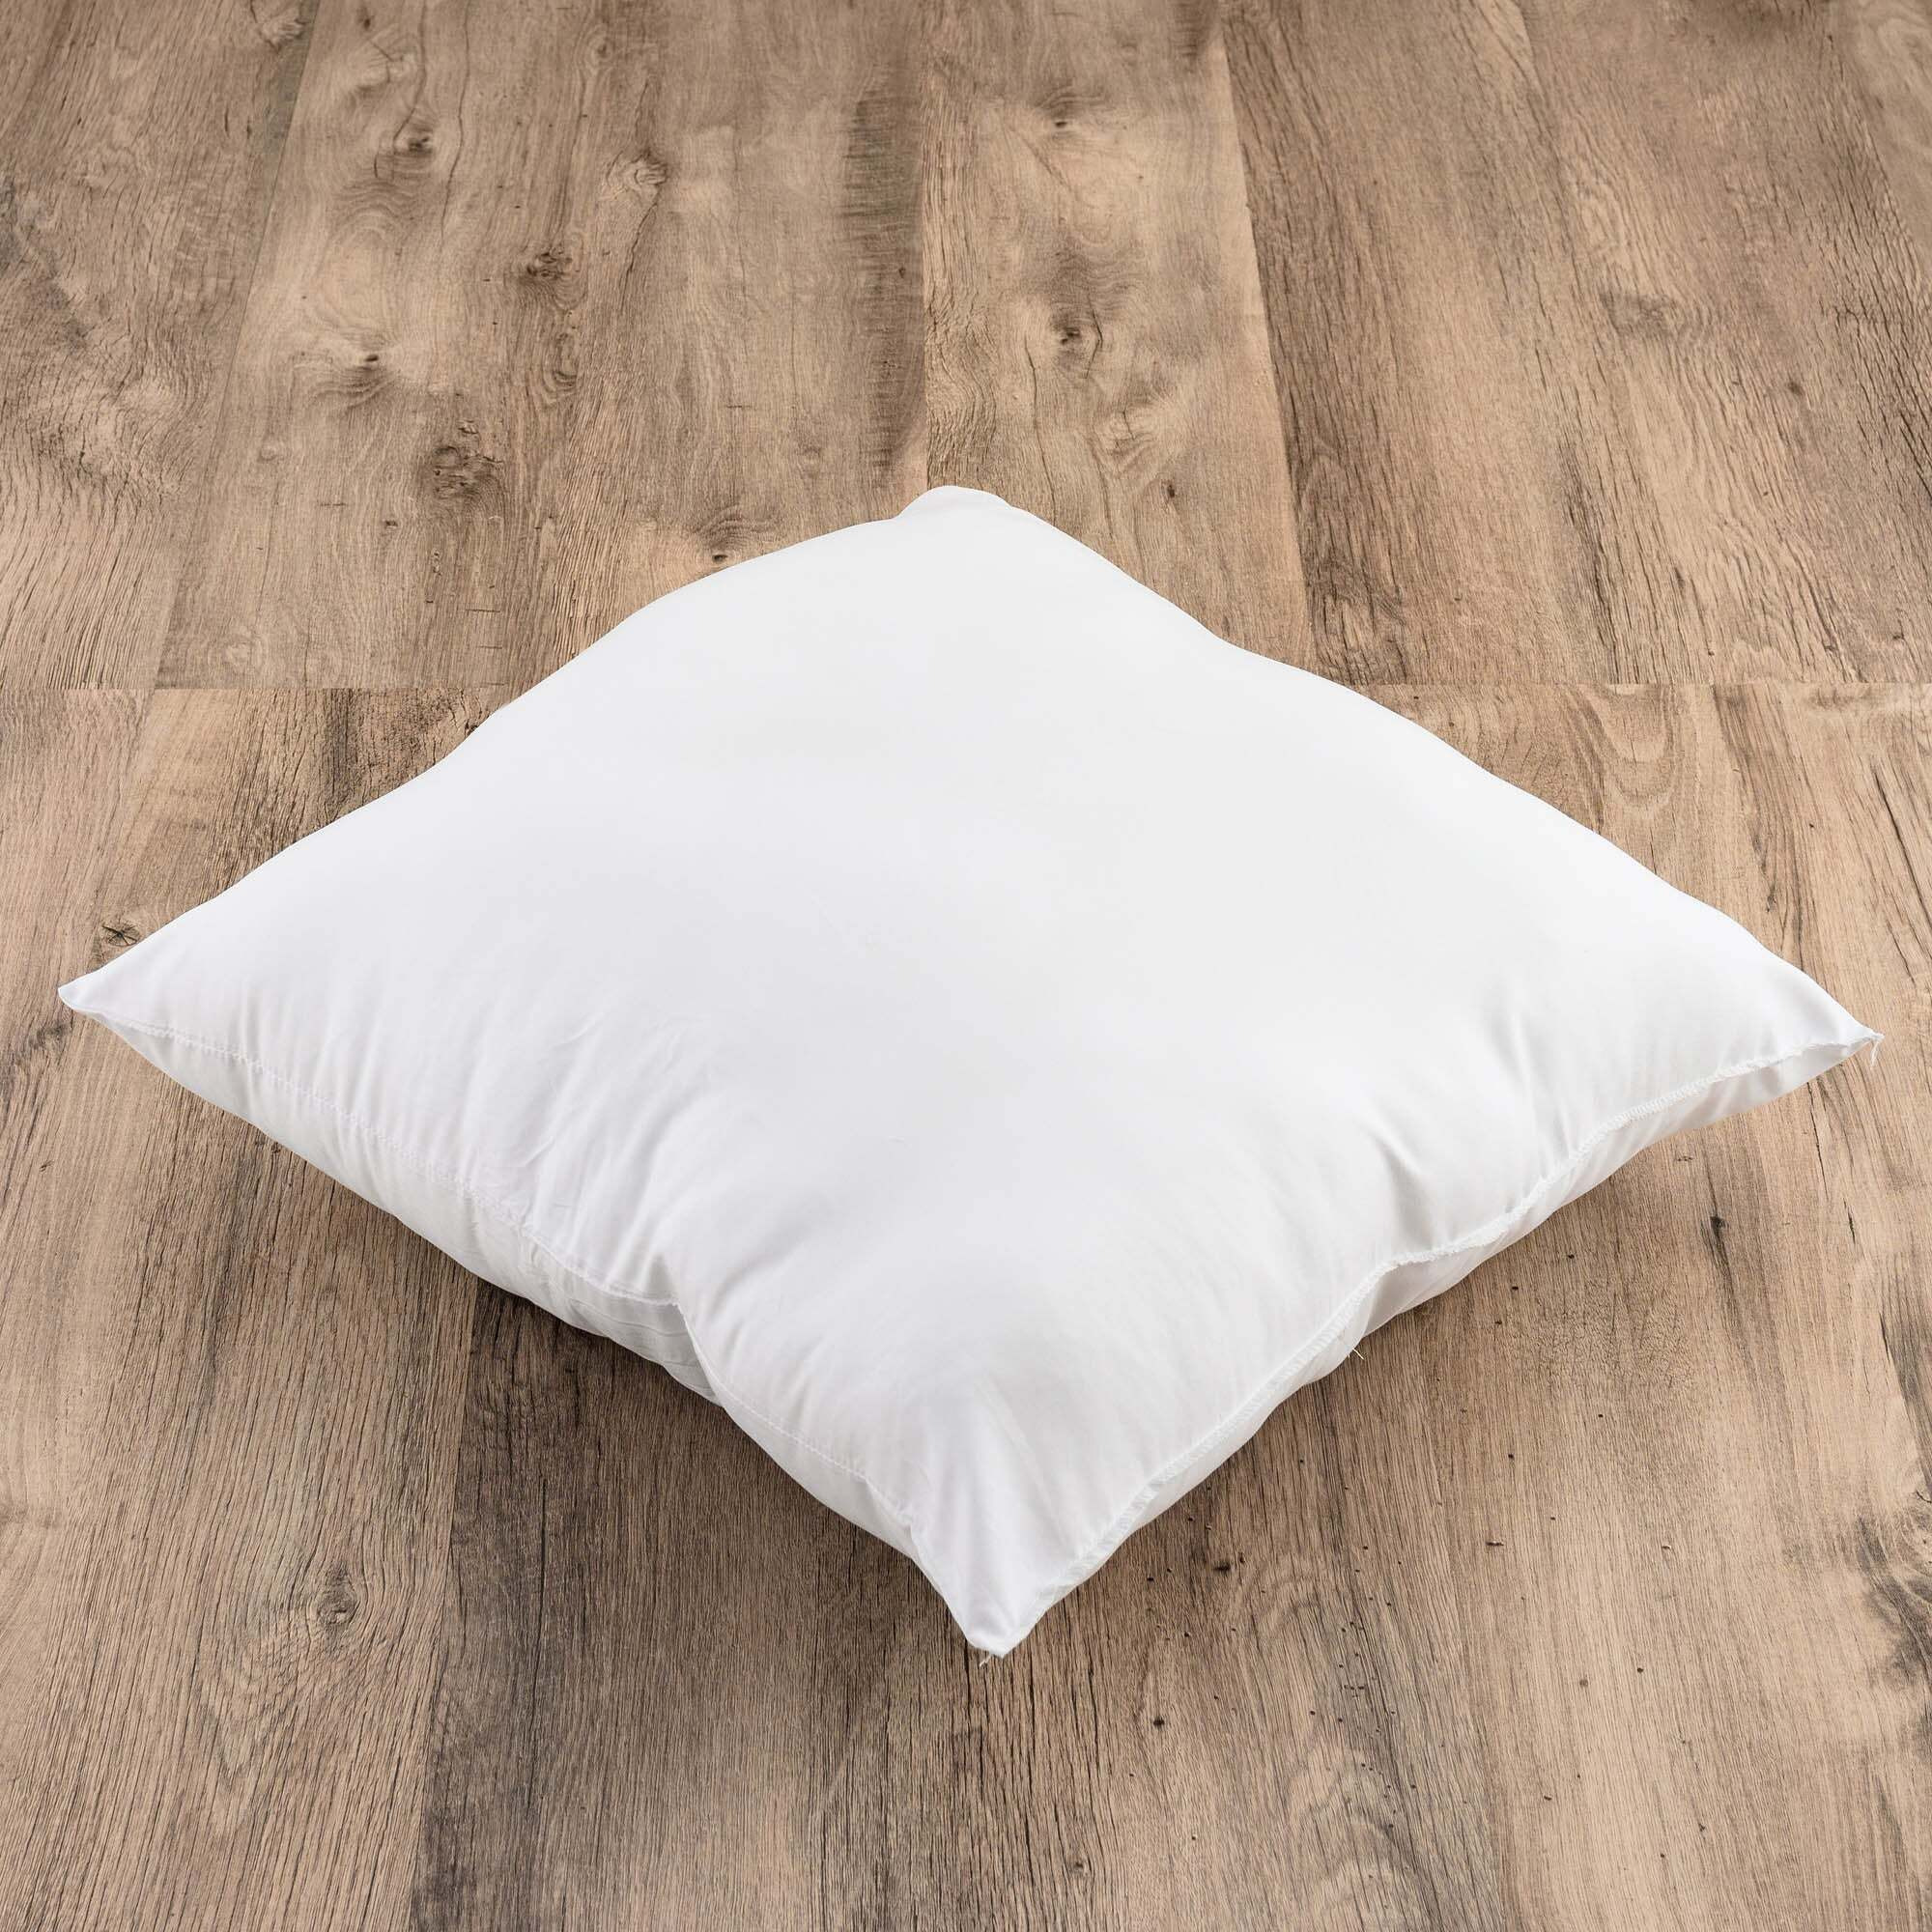 Simply Microfibre Cushion Pad White